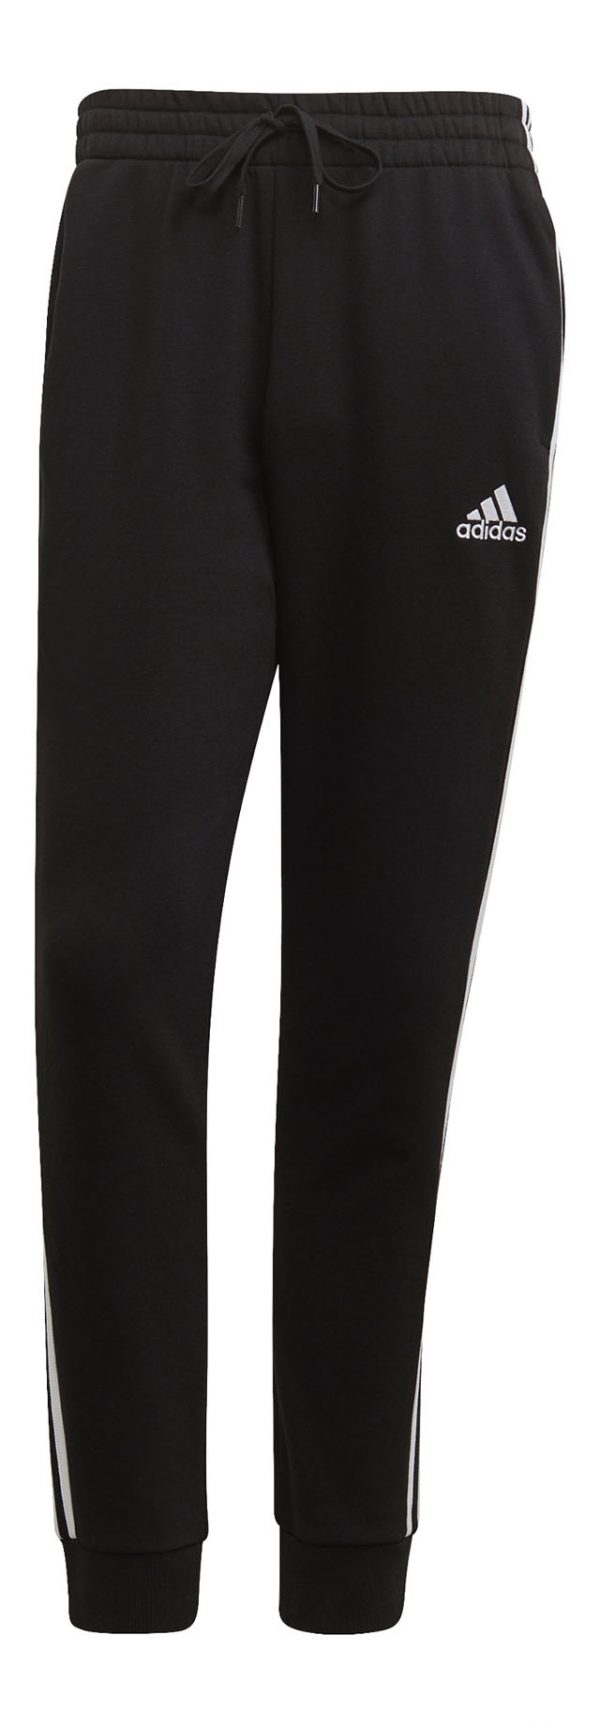 Spodnie adidas Essentials Fleece 3-stripes GK8821 Rozmiar S (173cm)